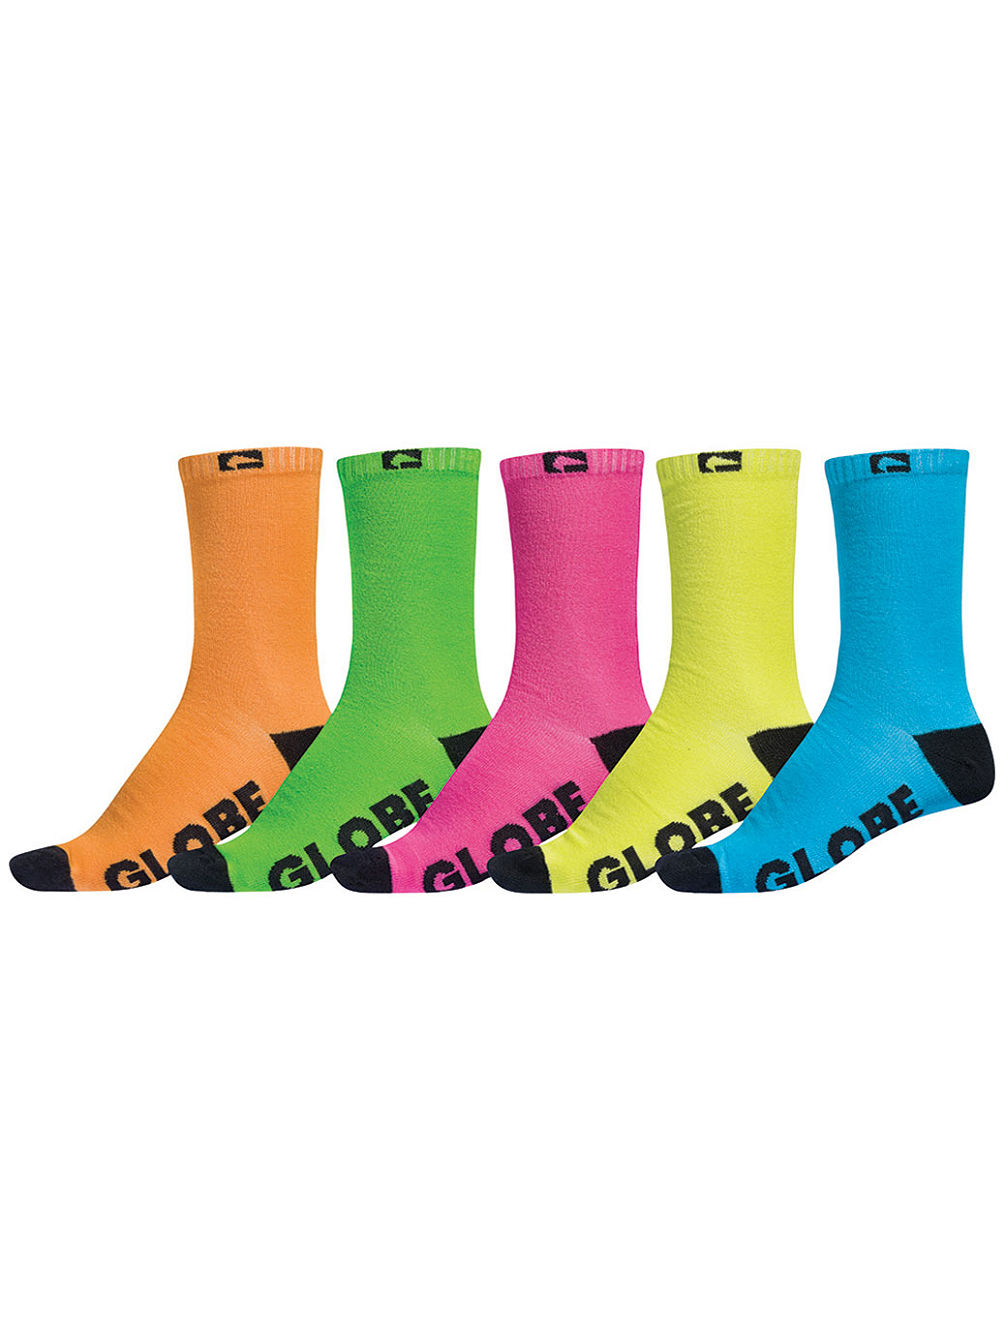 Neon 5 Pack Ankle Socks Boys